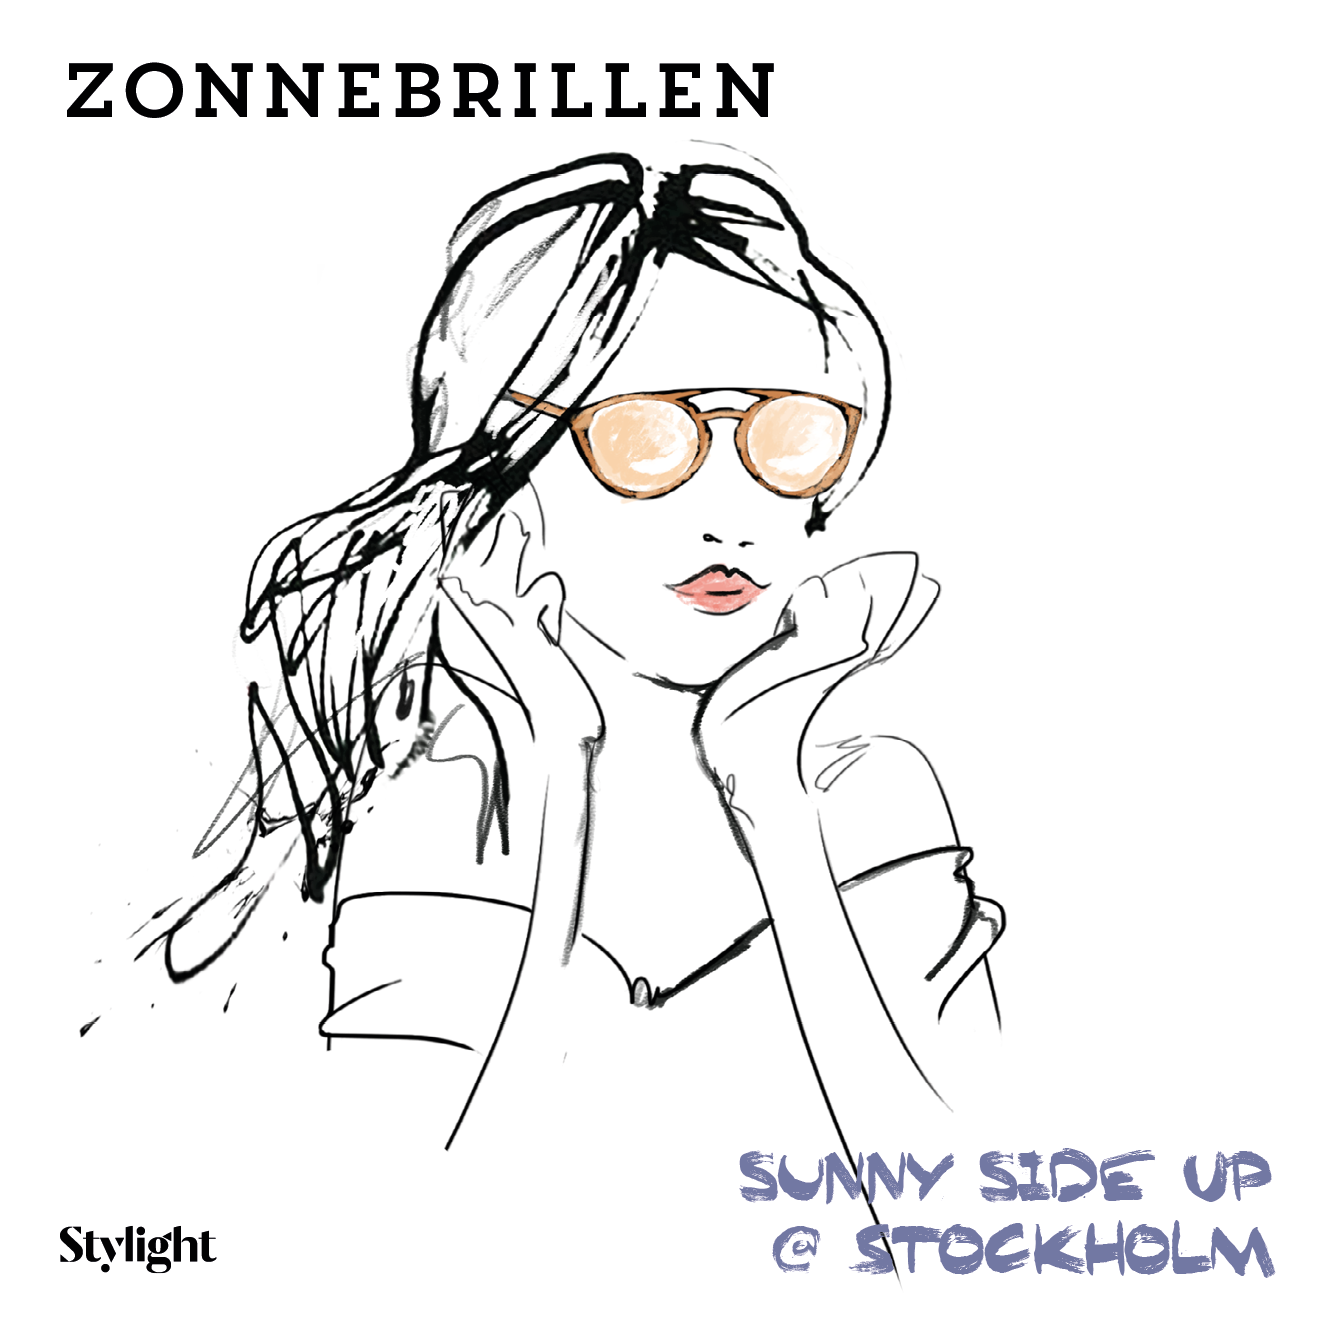 Stockholm fashion zonnebrillen Stylight